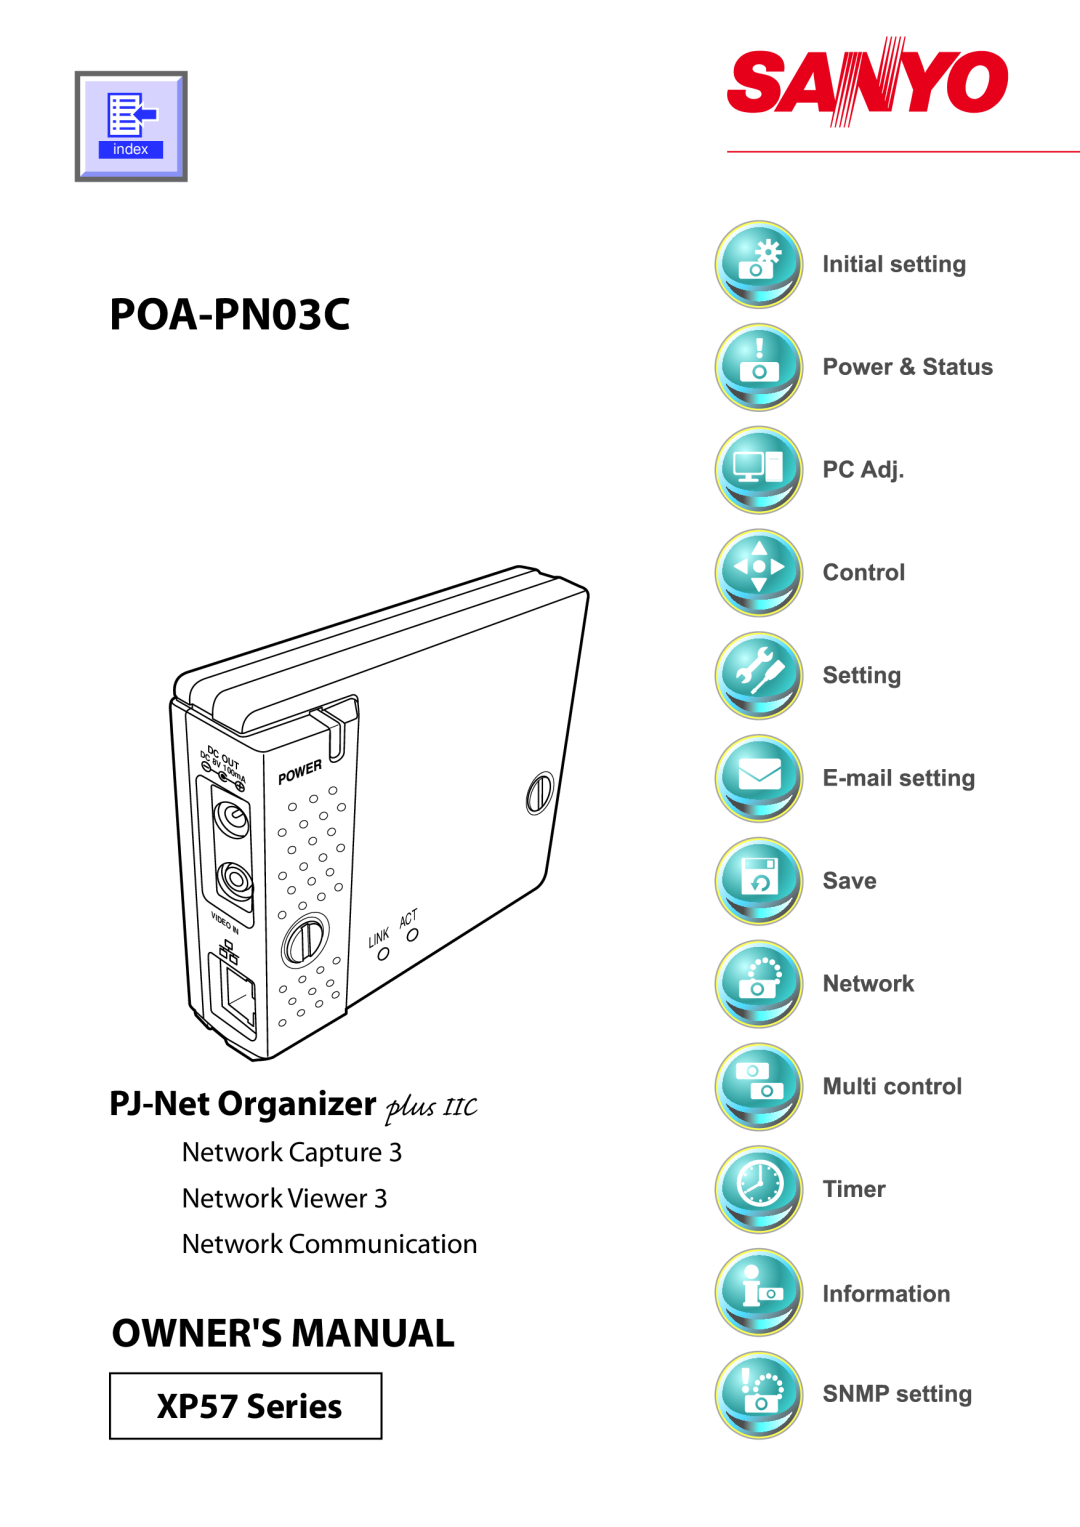 Sanyo POA-PN03C owner manual PJ-NetOrganizer plus IIC, XP57 Series, Owners Manual, Network Capture Network Viewer, index 